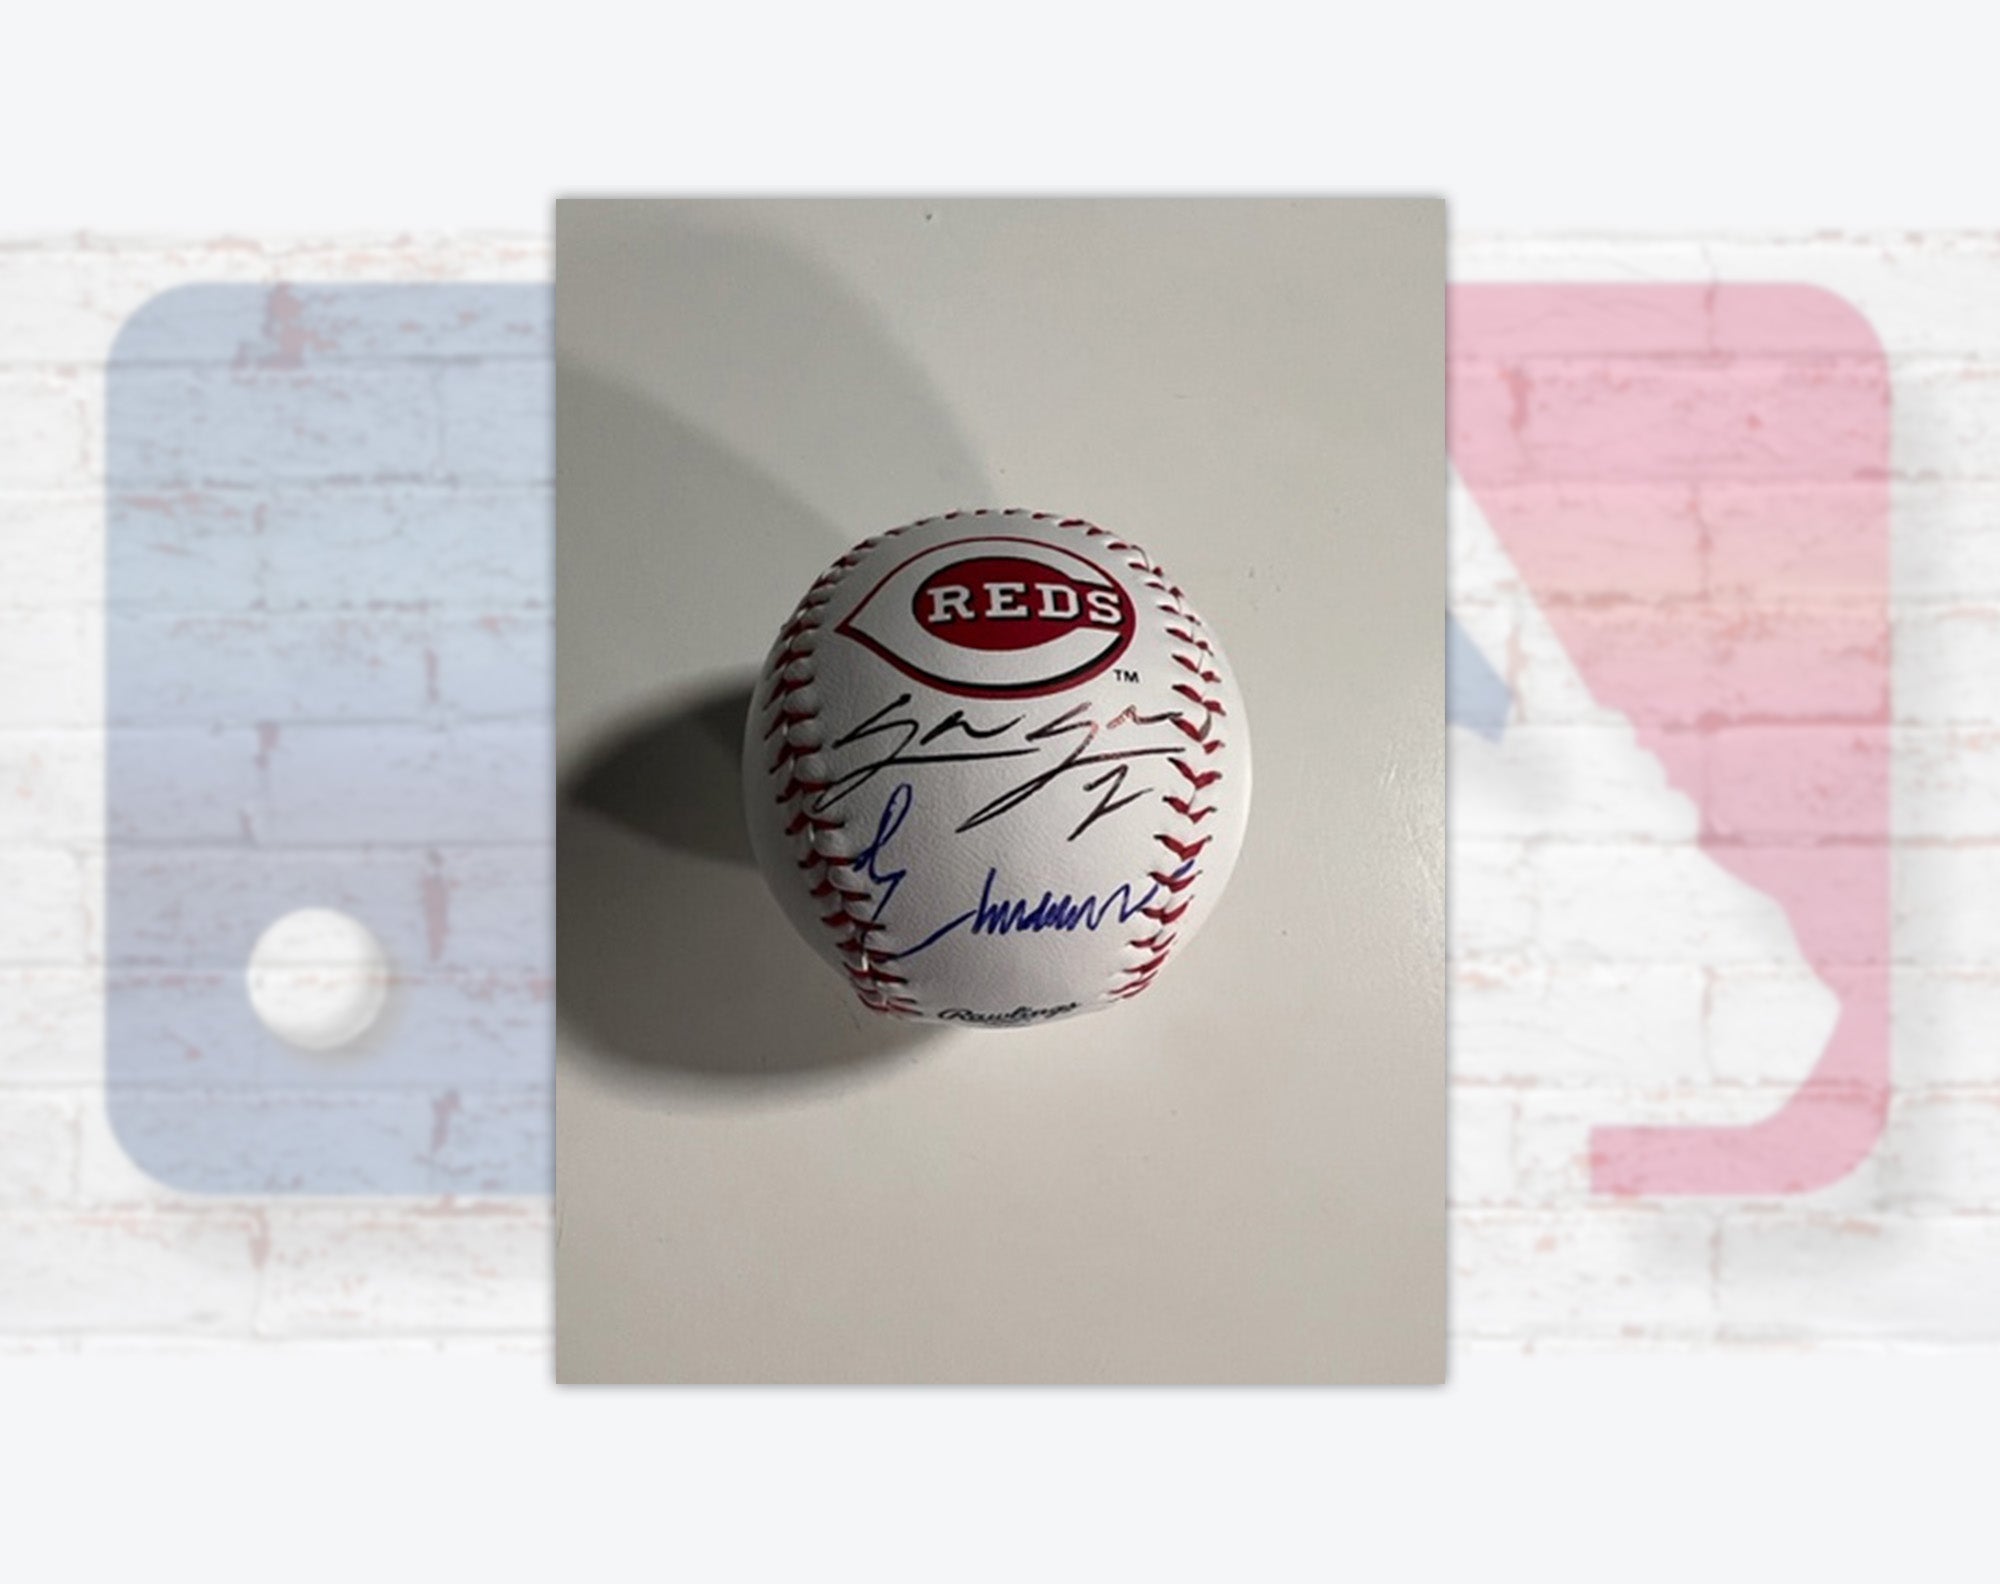 Elly De La Cruz, Spencer Steer Cincinnati Reds Rawlings MLB Baseball signed with proof and free acrylic display case